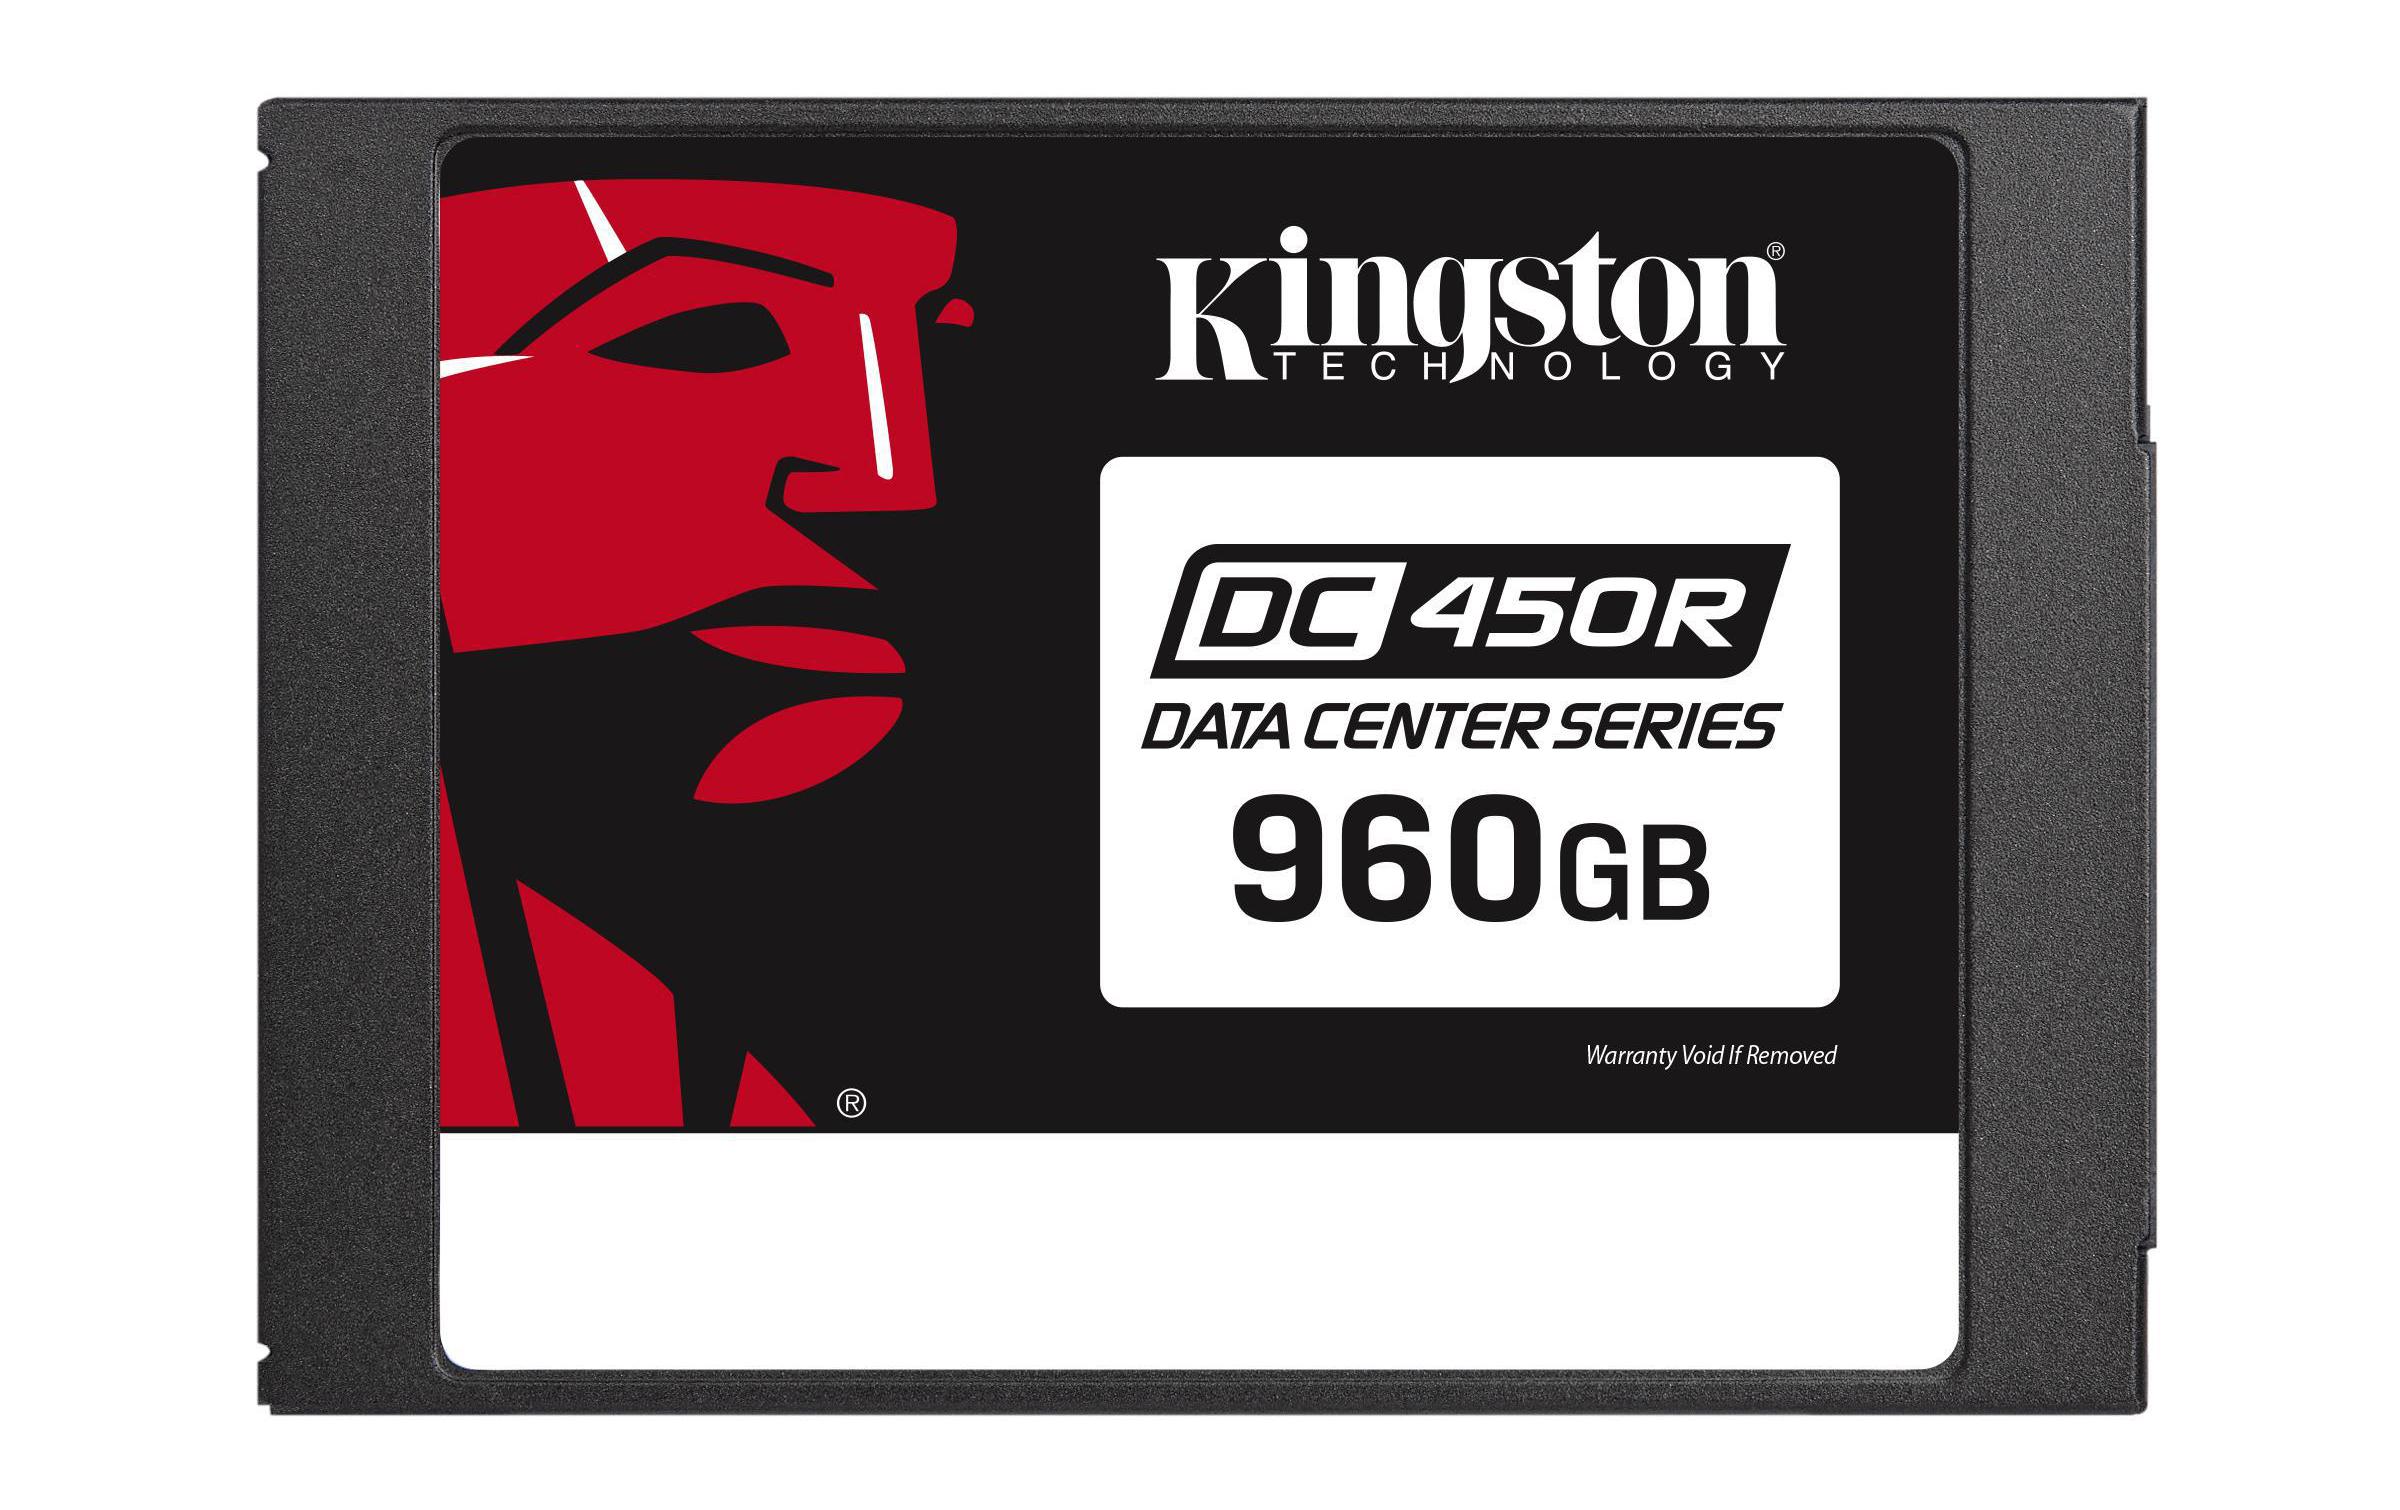 Kingston SSD Data Center DC450R 2.5 SATA 960 GB Read Intensive